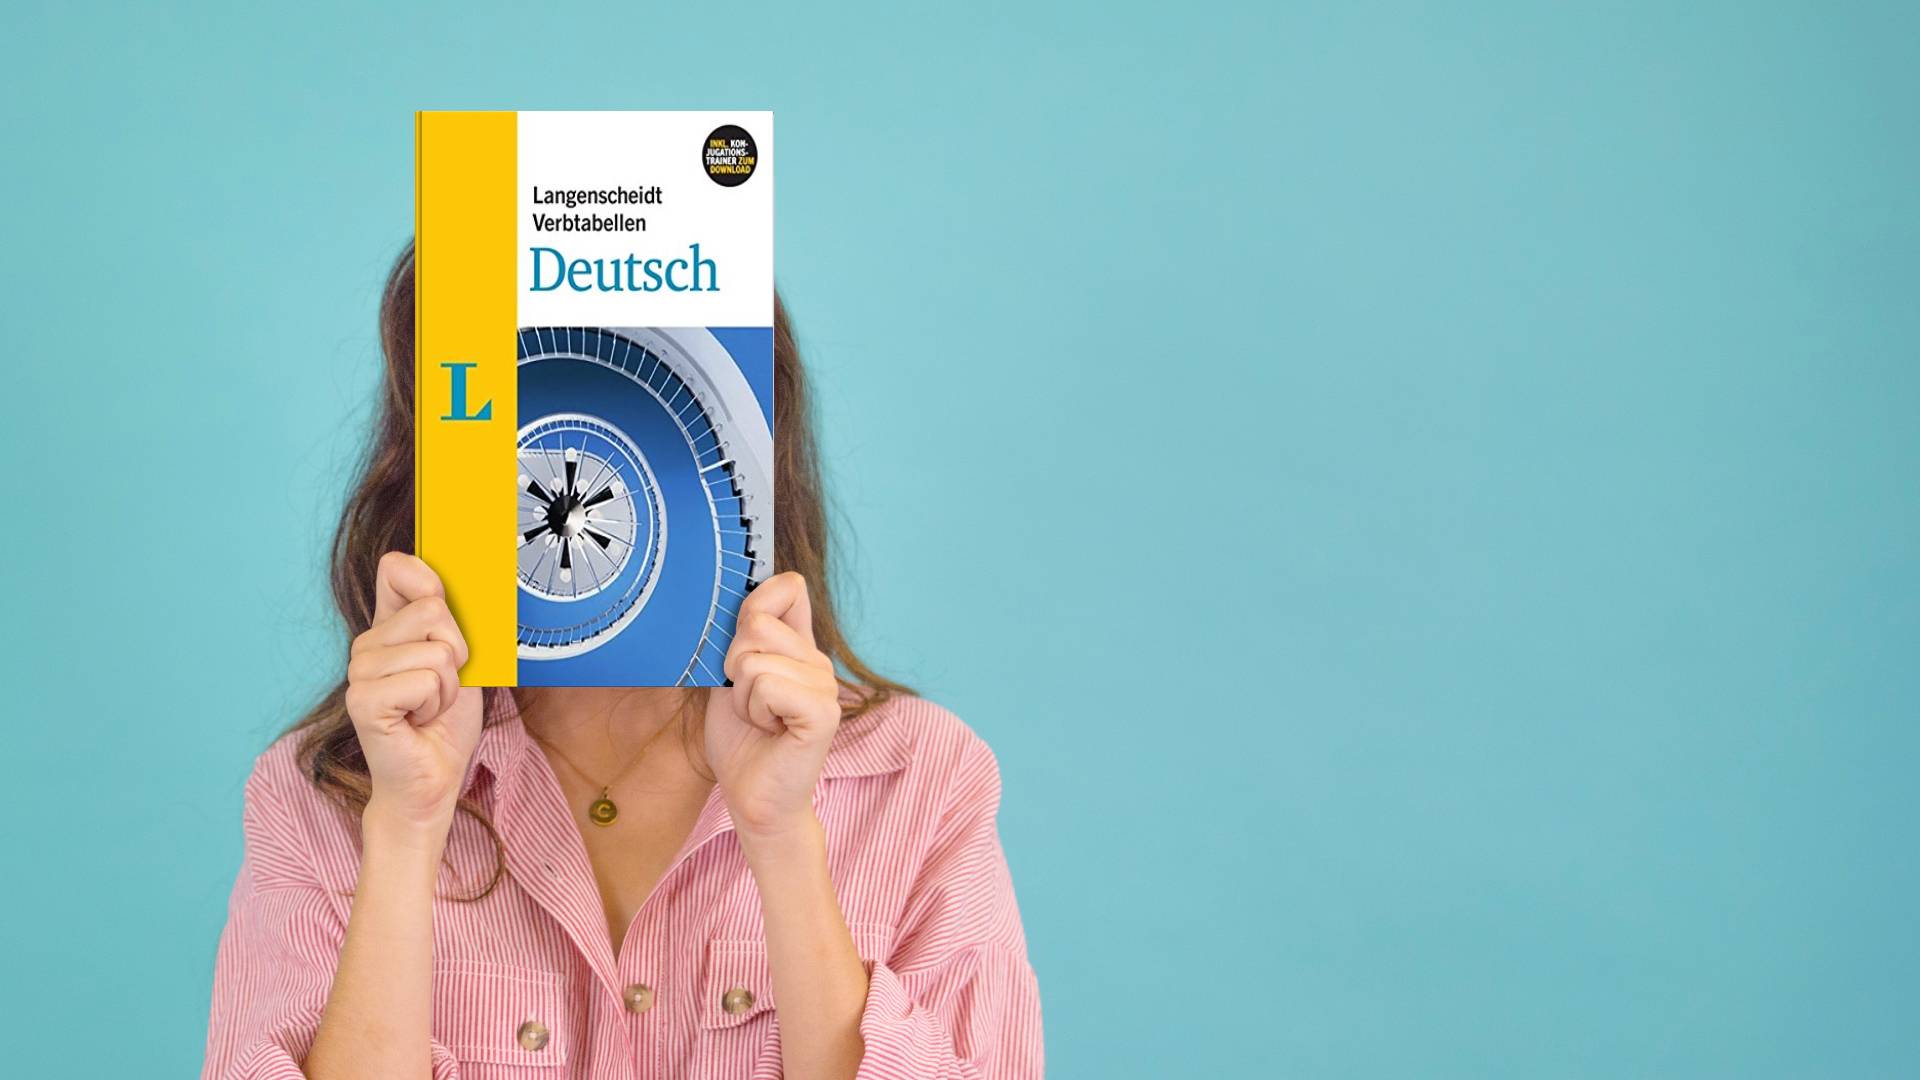 خرید کتاب زبان | زبان استور | Langenscheidt Verbtabellen Deutsch | کتاب زبان آلمانی